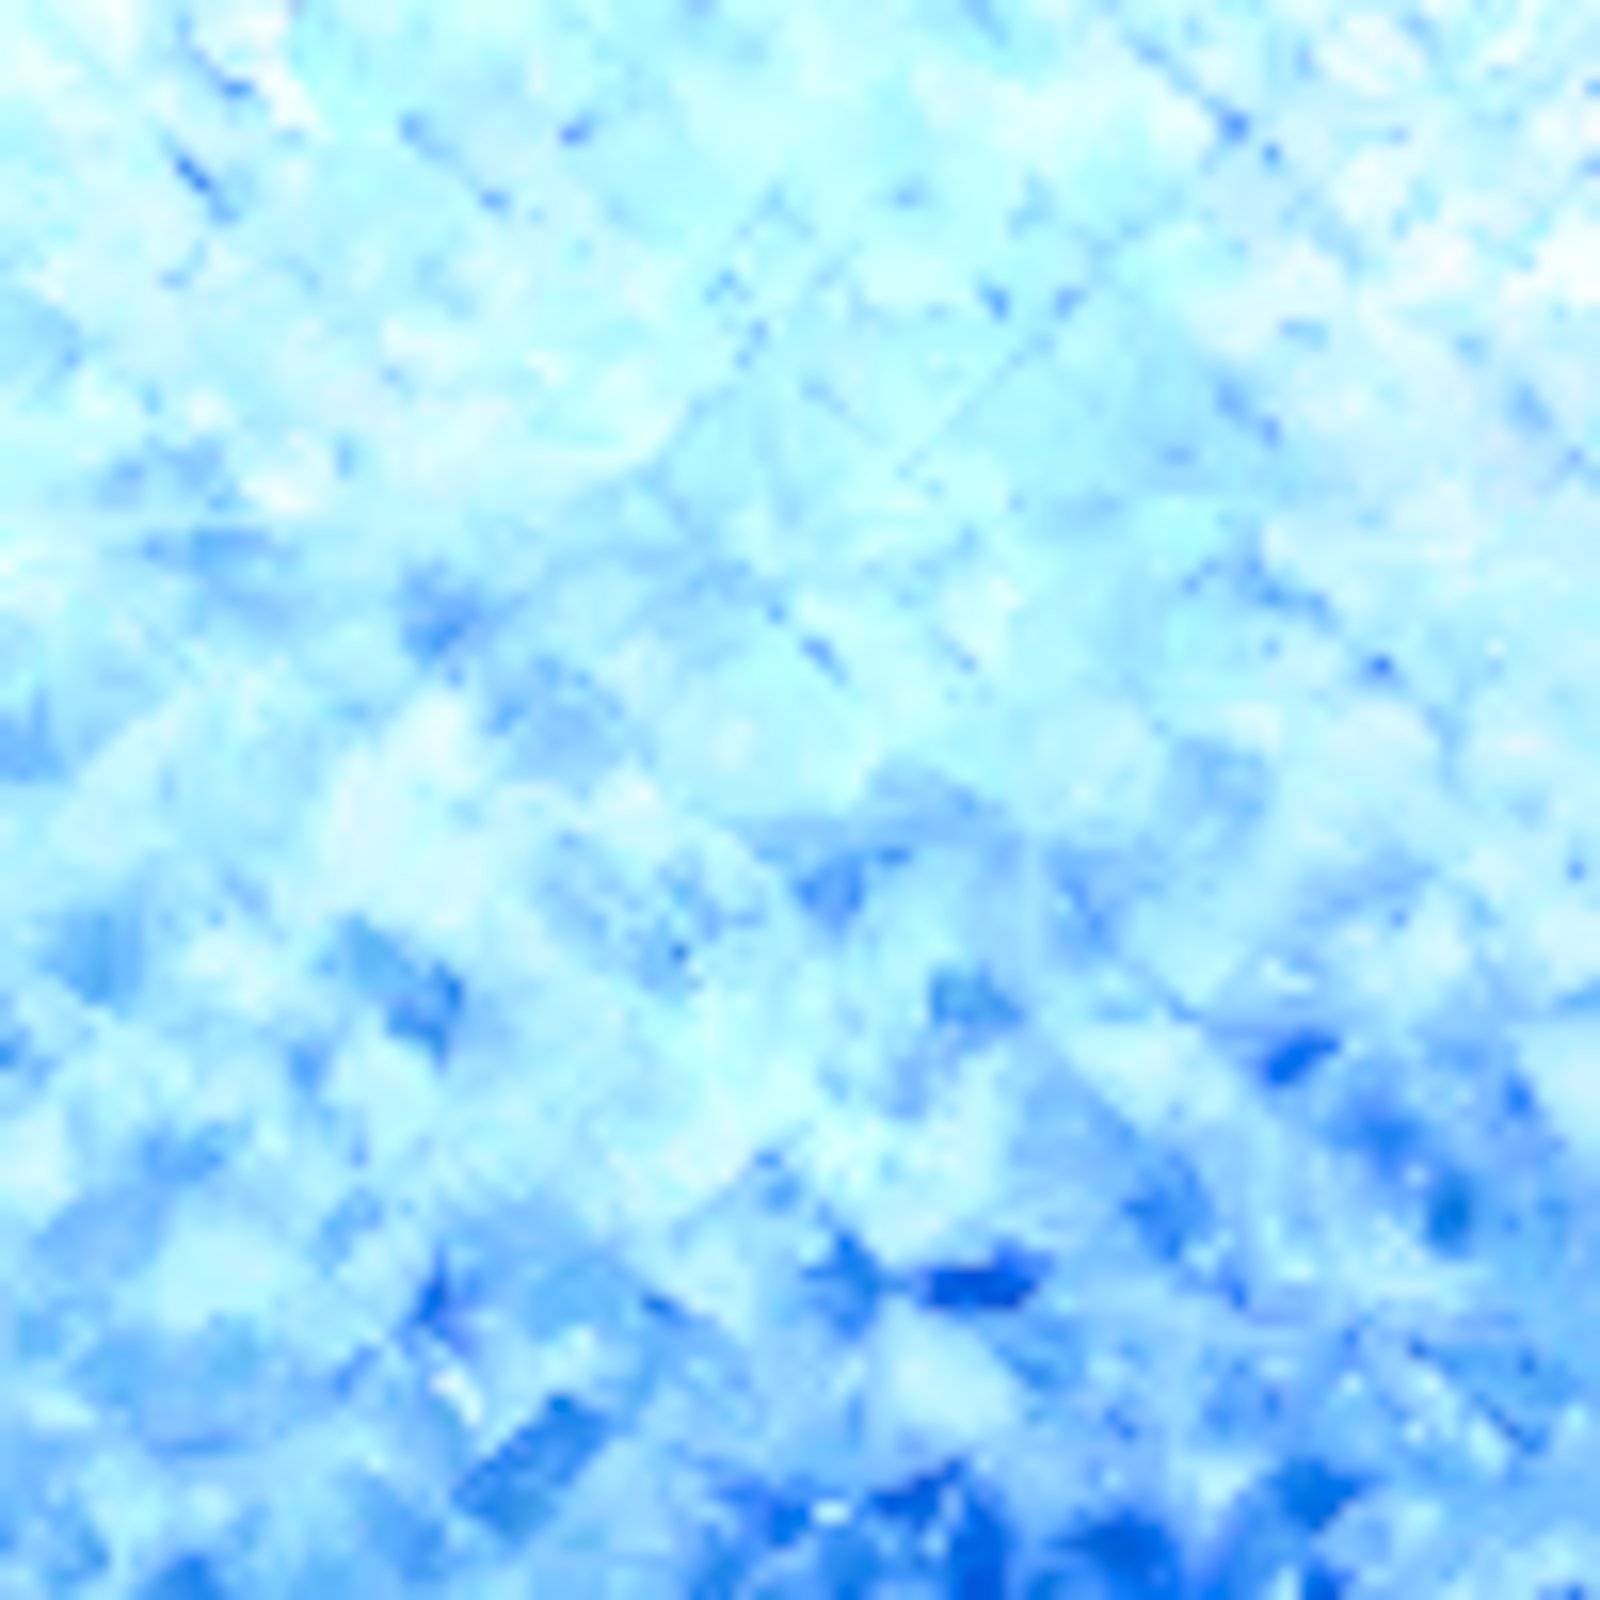 Glow blue mosaic background. EPS 8 by Petrov_Vladimir